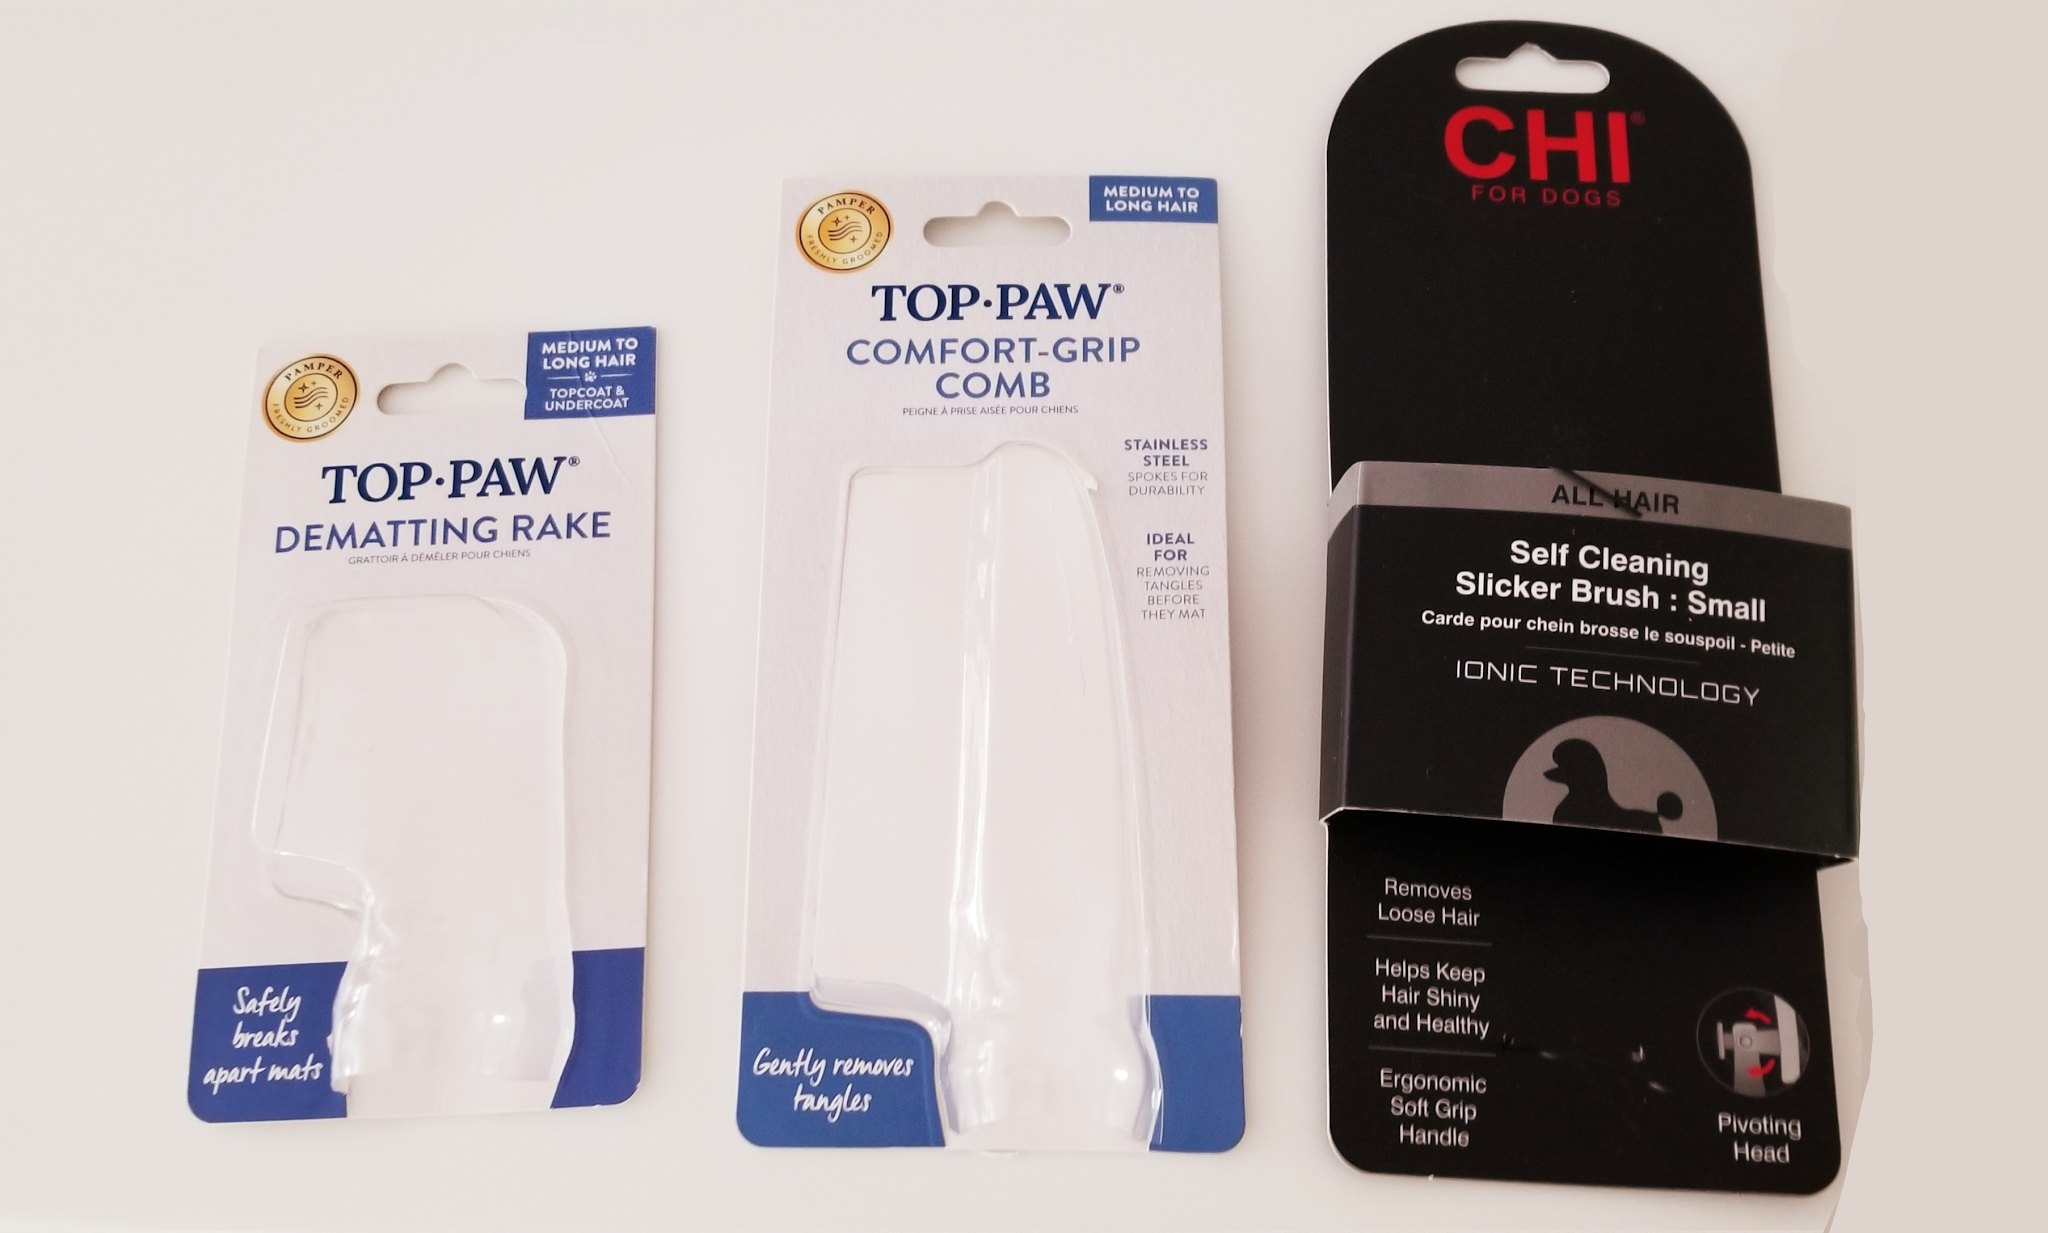 Top Paw Dematting Rake Top Paw Comfort-Grip Comb Chi Self-Cleaning Slicker Brush Small